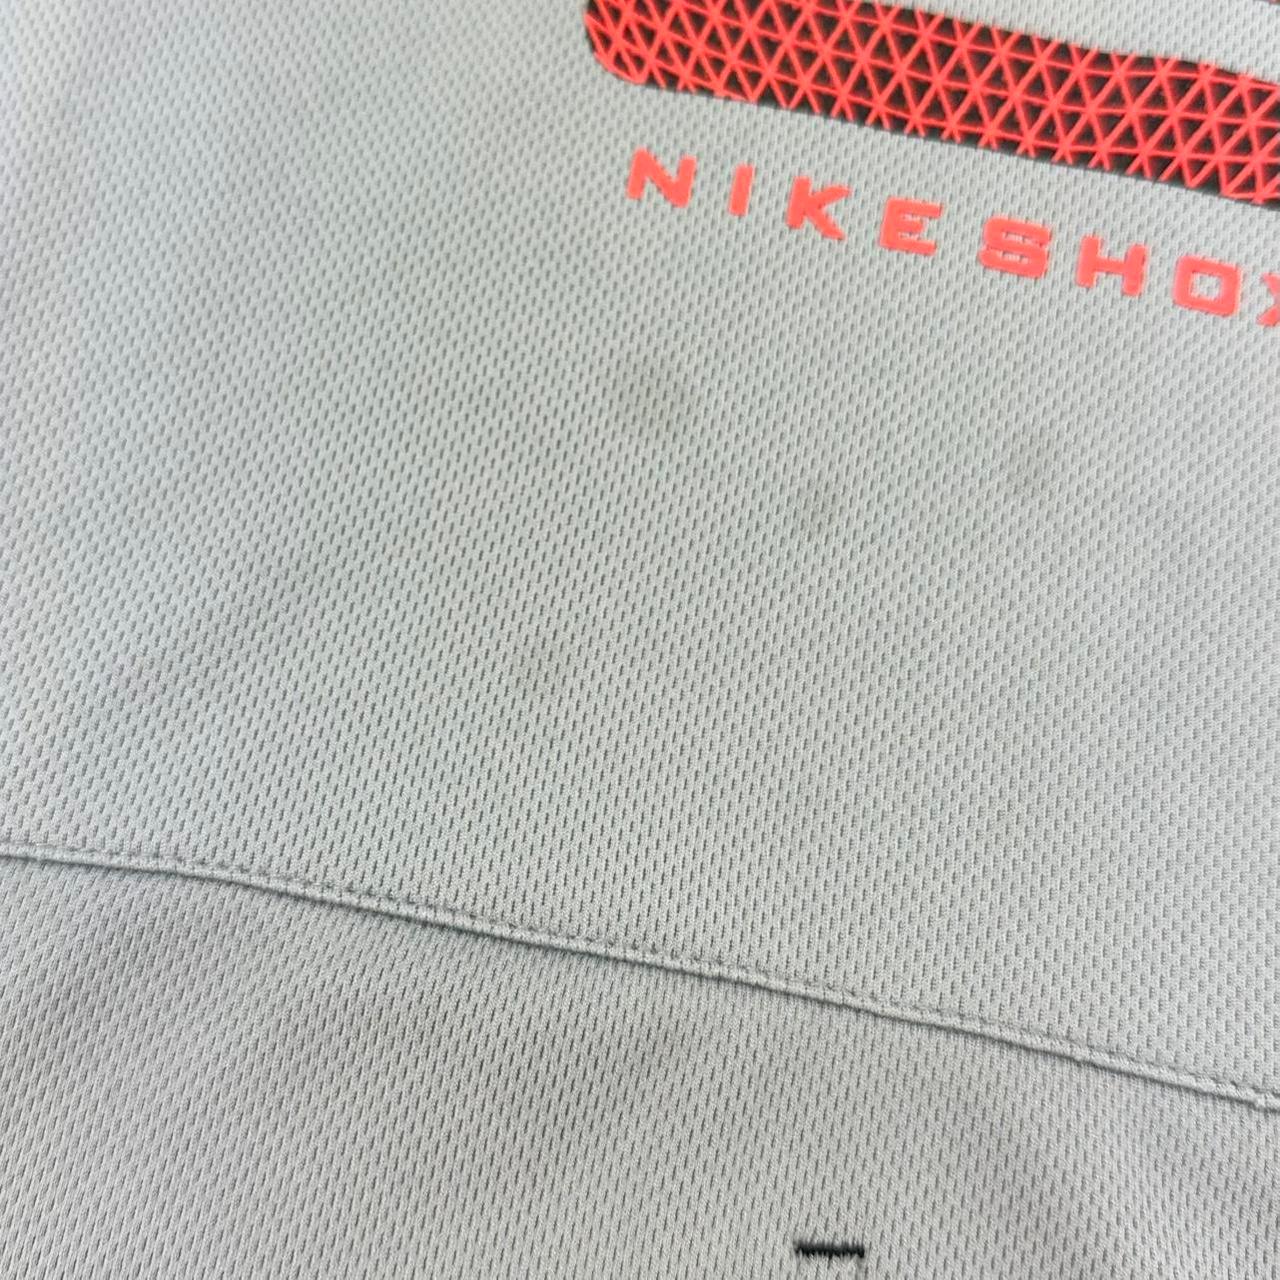 Vintage Nike Shox Vest Hoodie Size L - Known Source